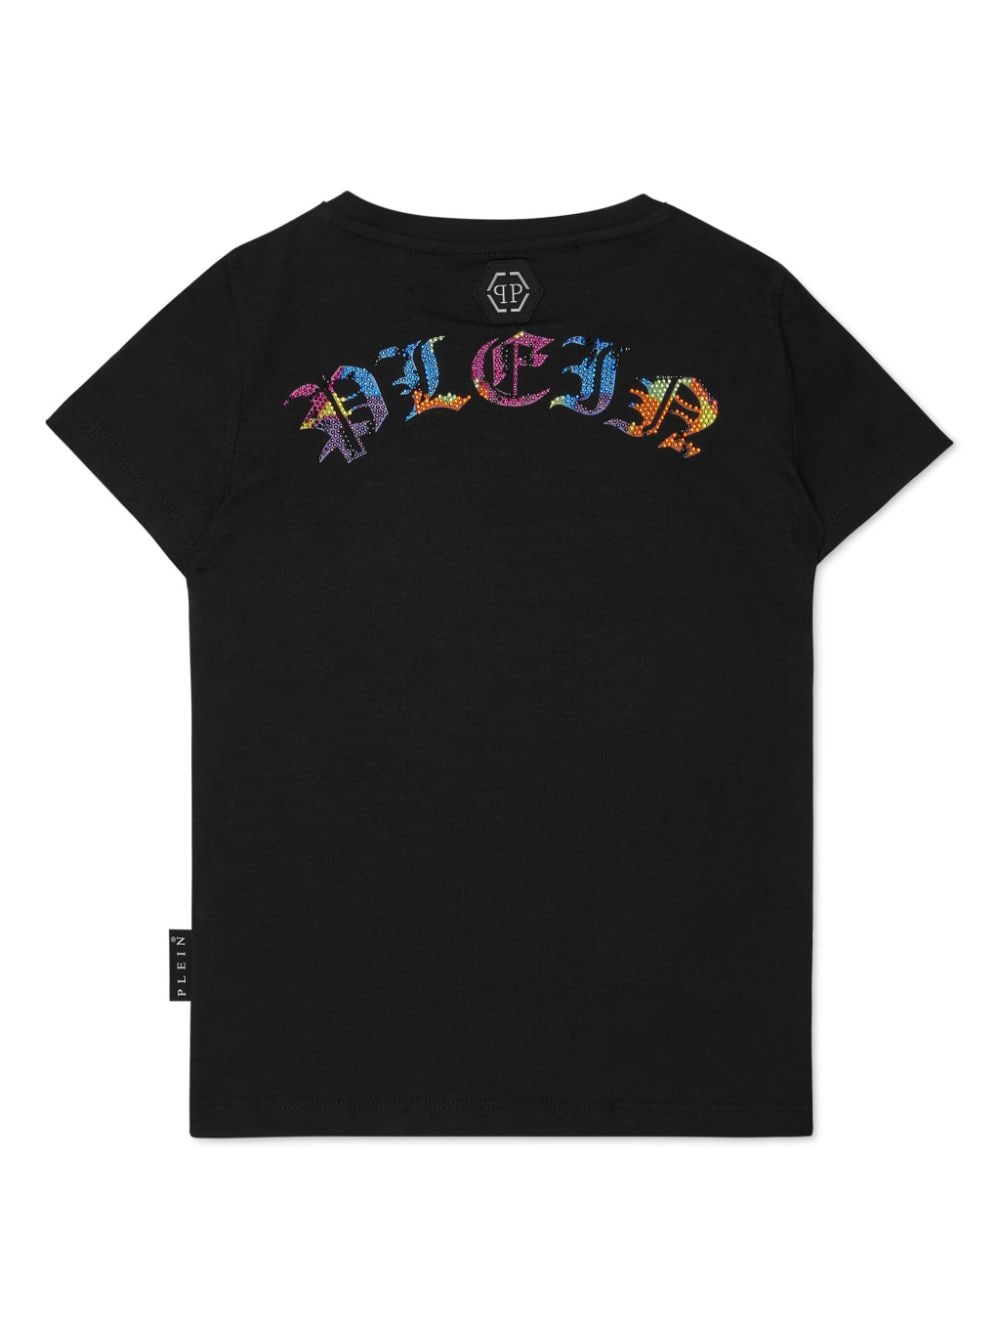 Philipp Plein Pure Smile T-shirt verfraaid met kristallen - Zwart